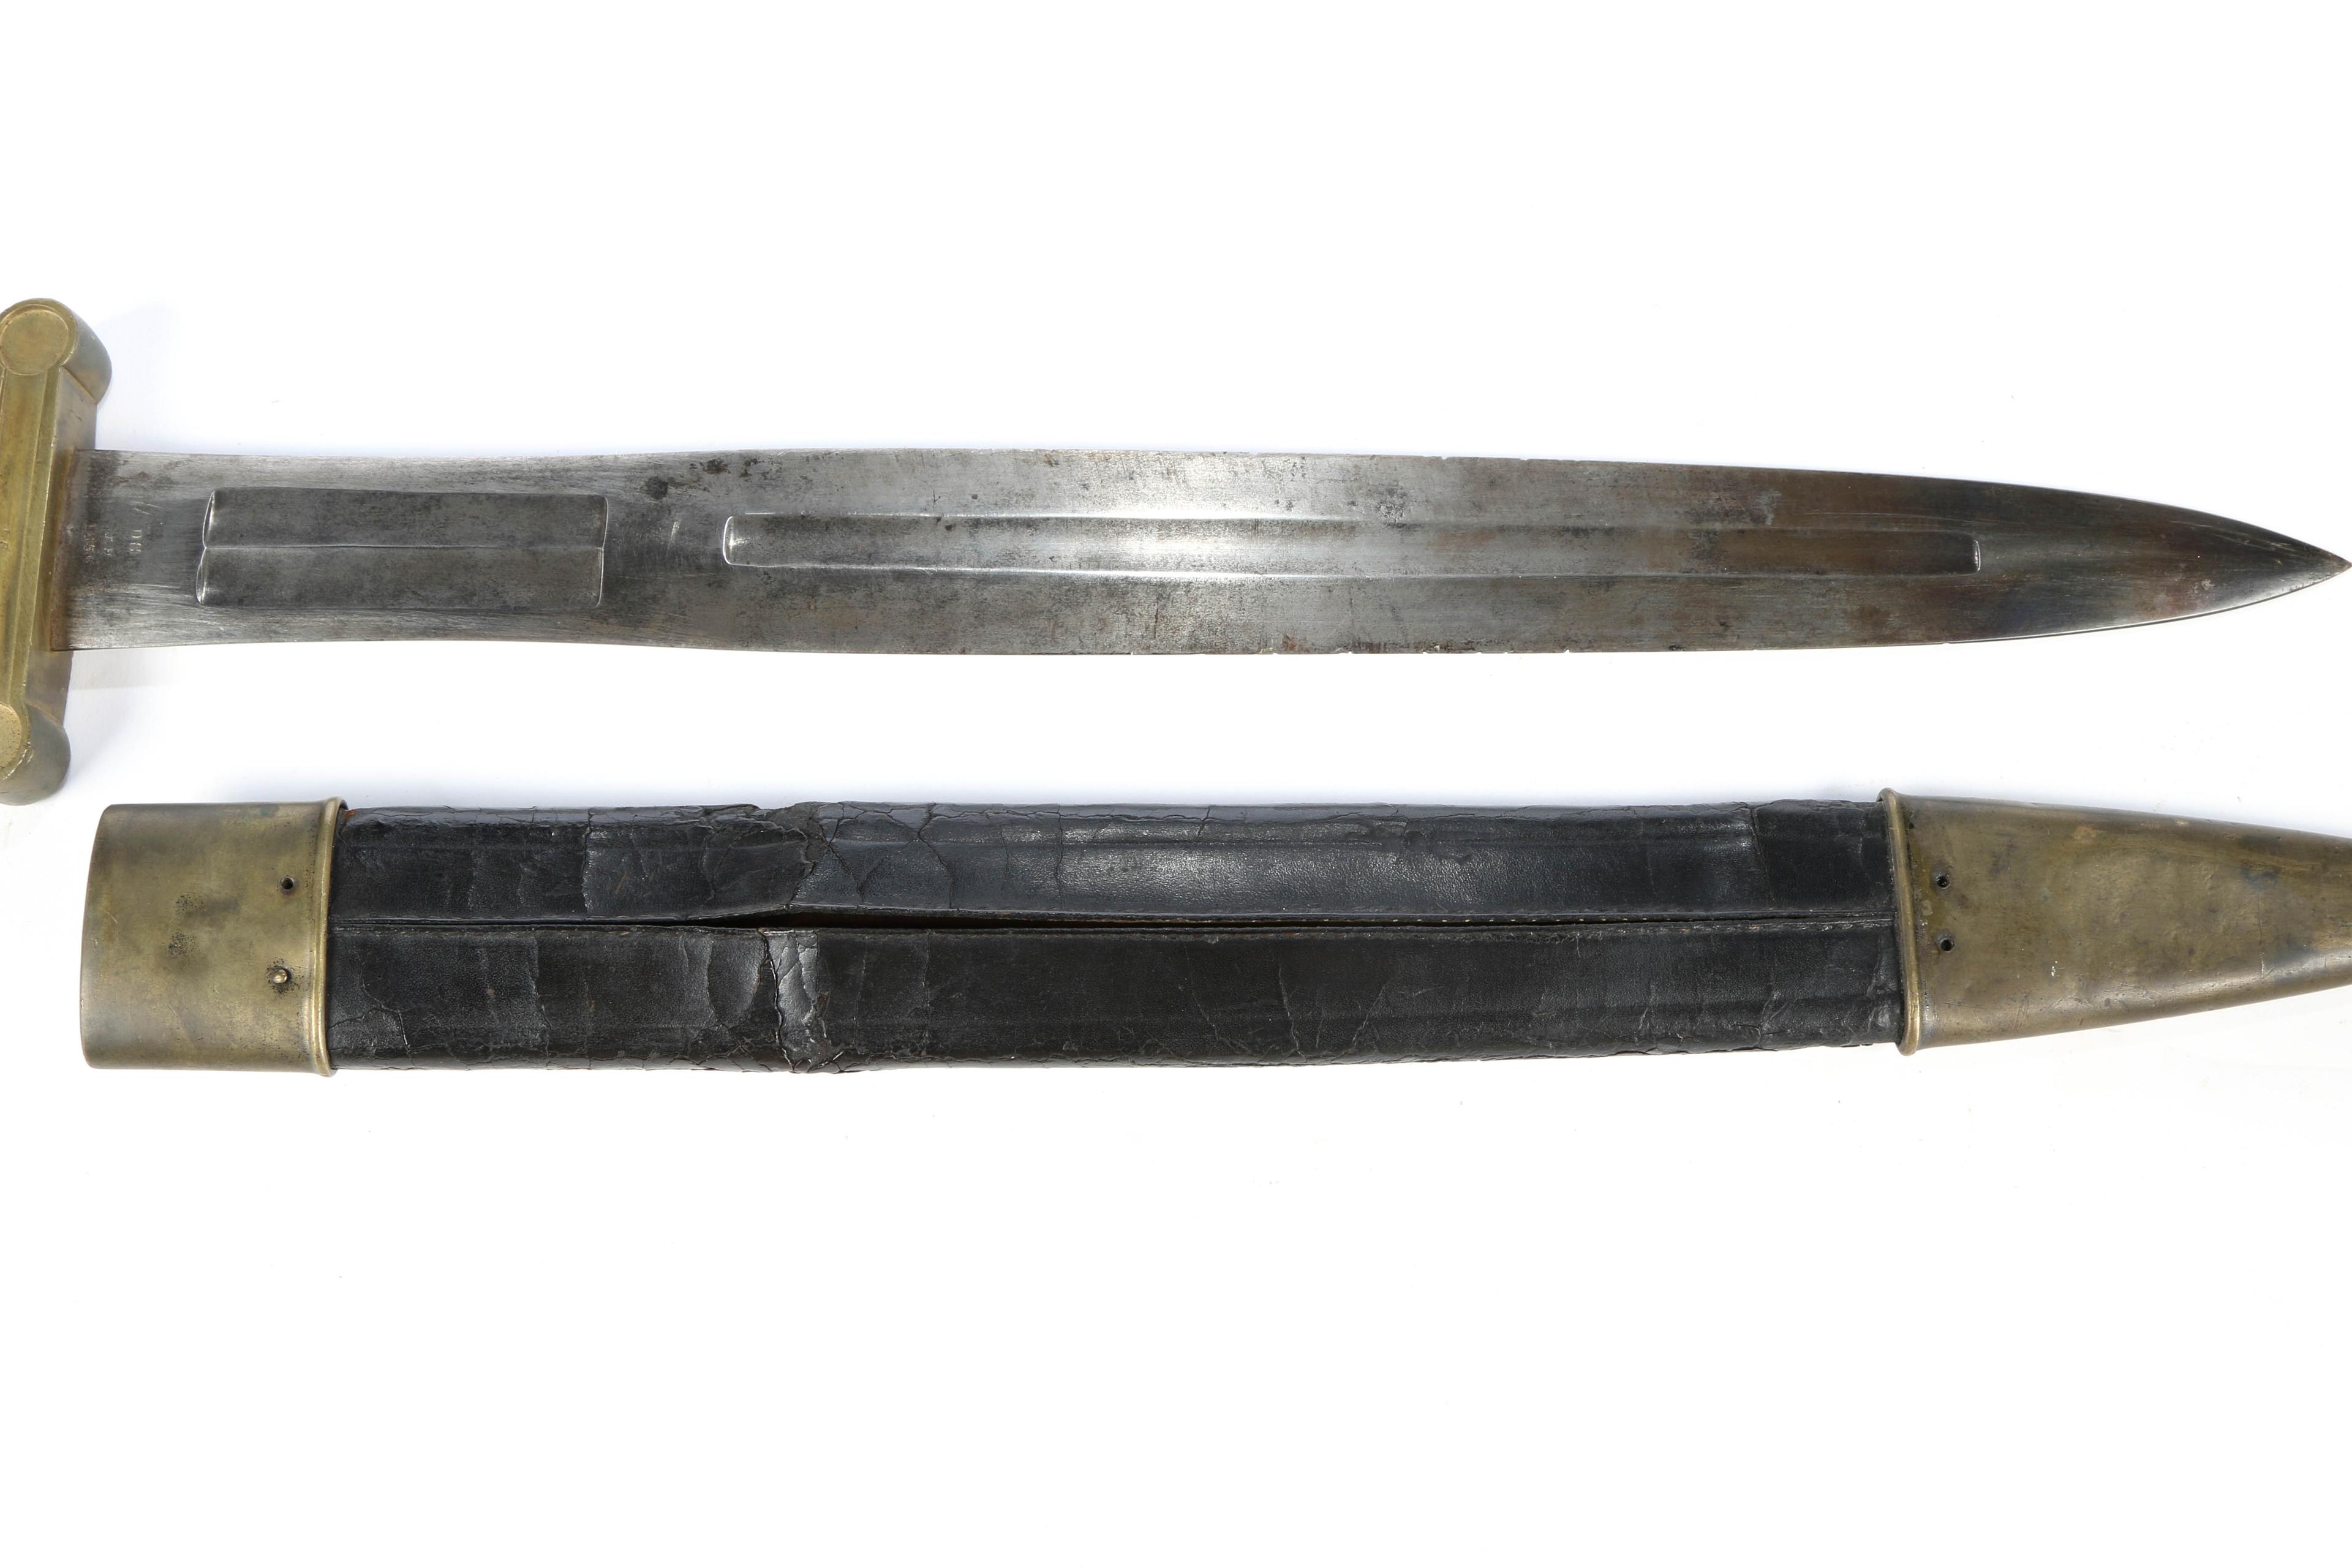 Ames 1832 Foot Artillery Sword